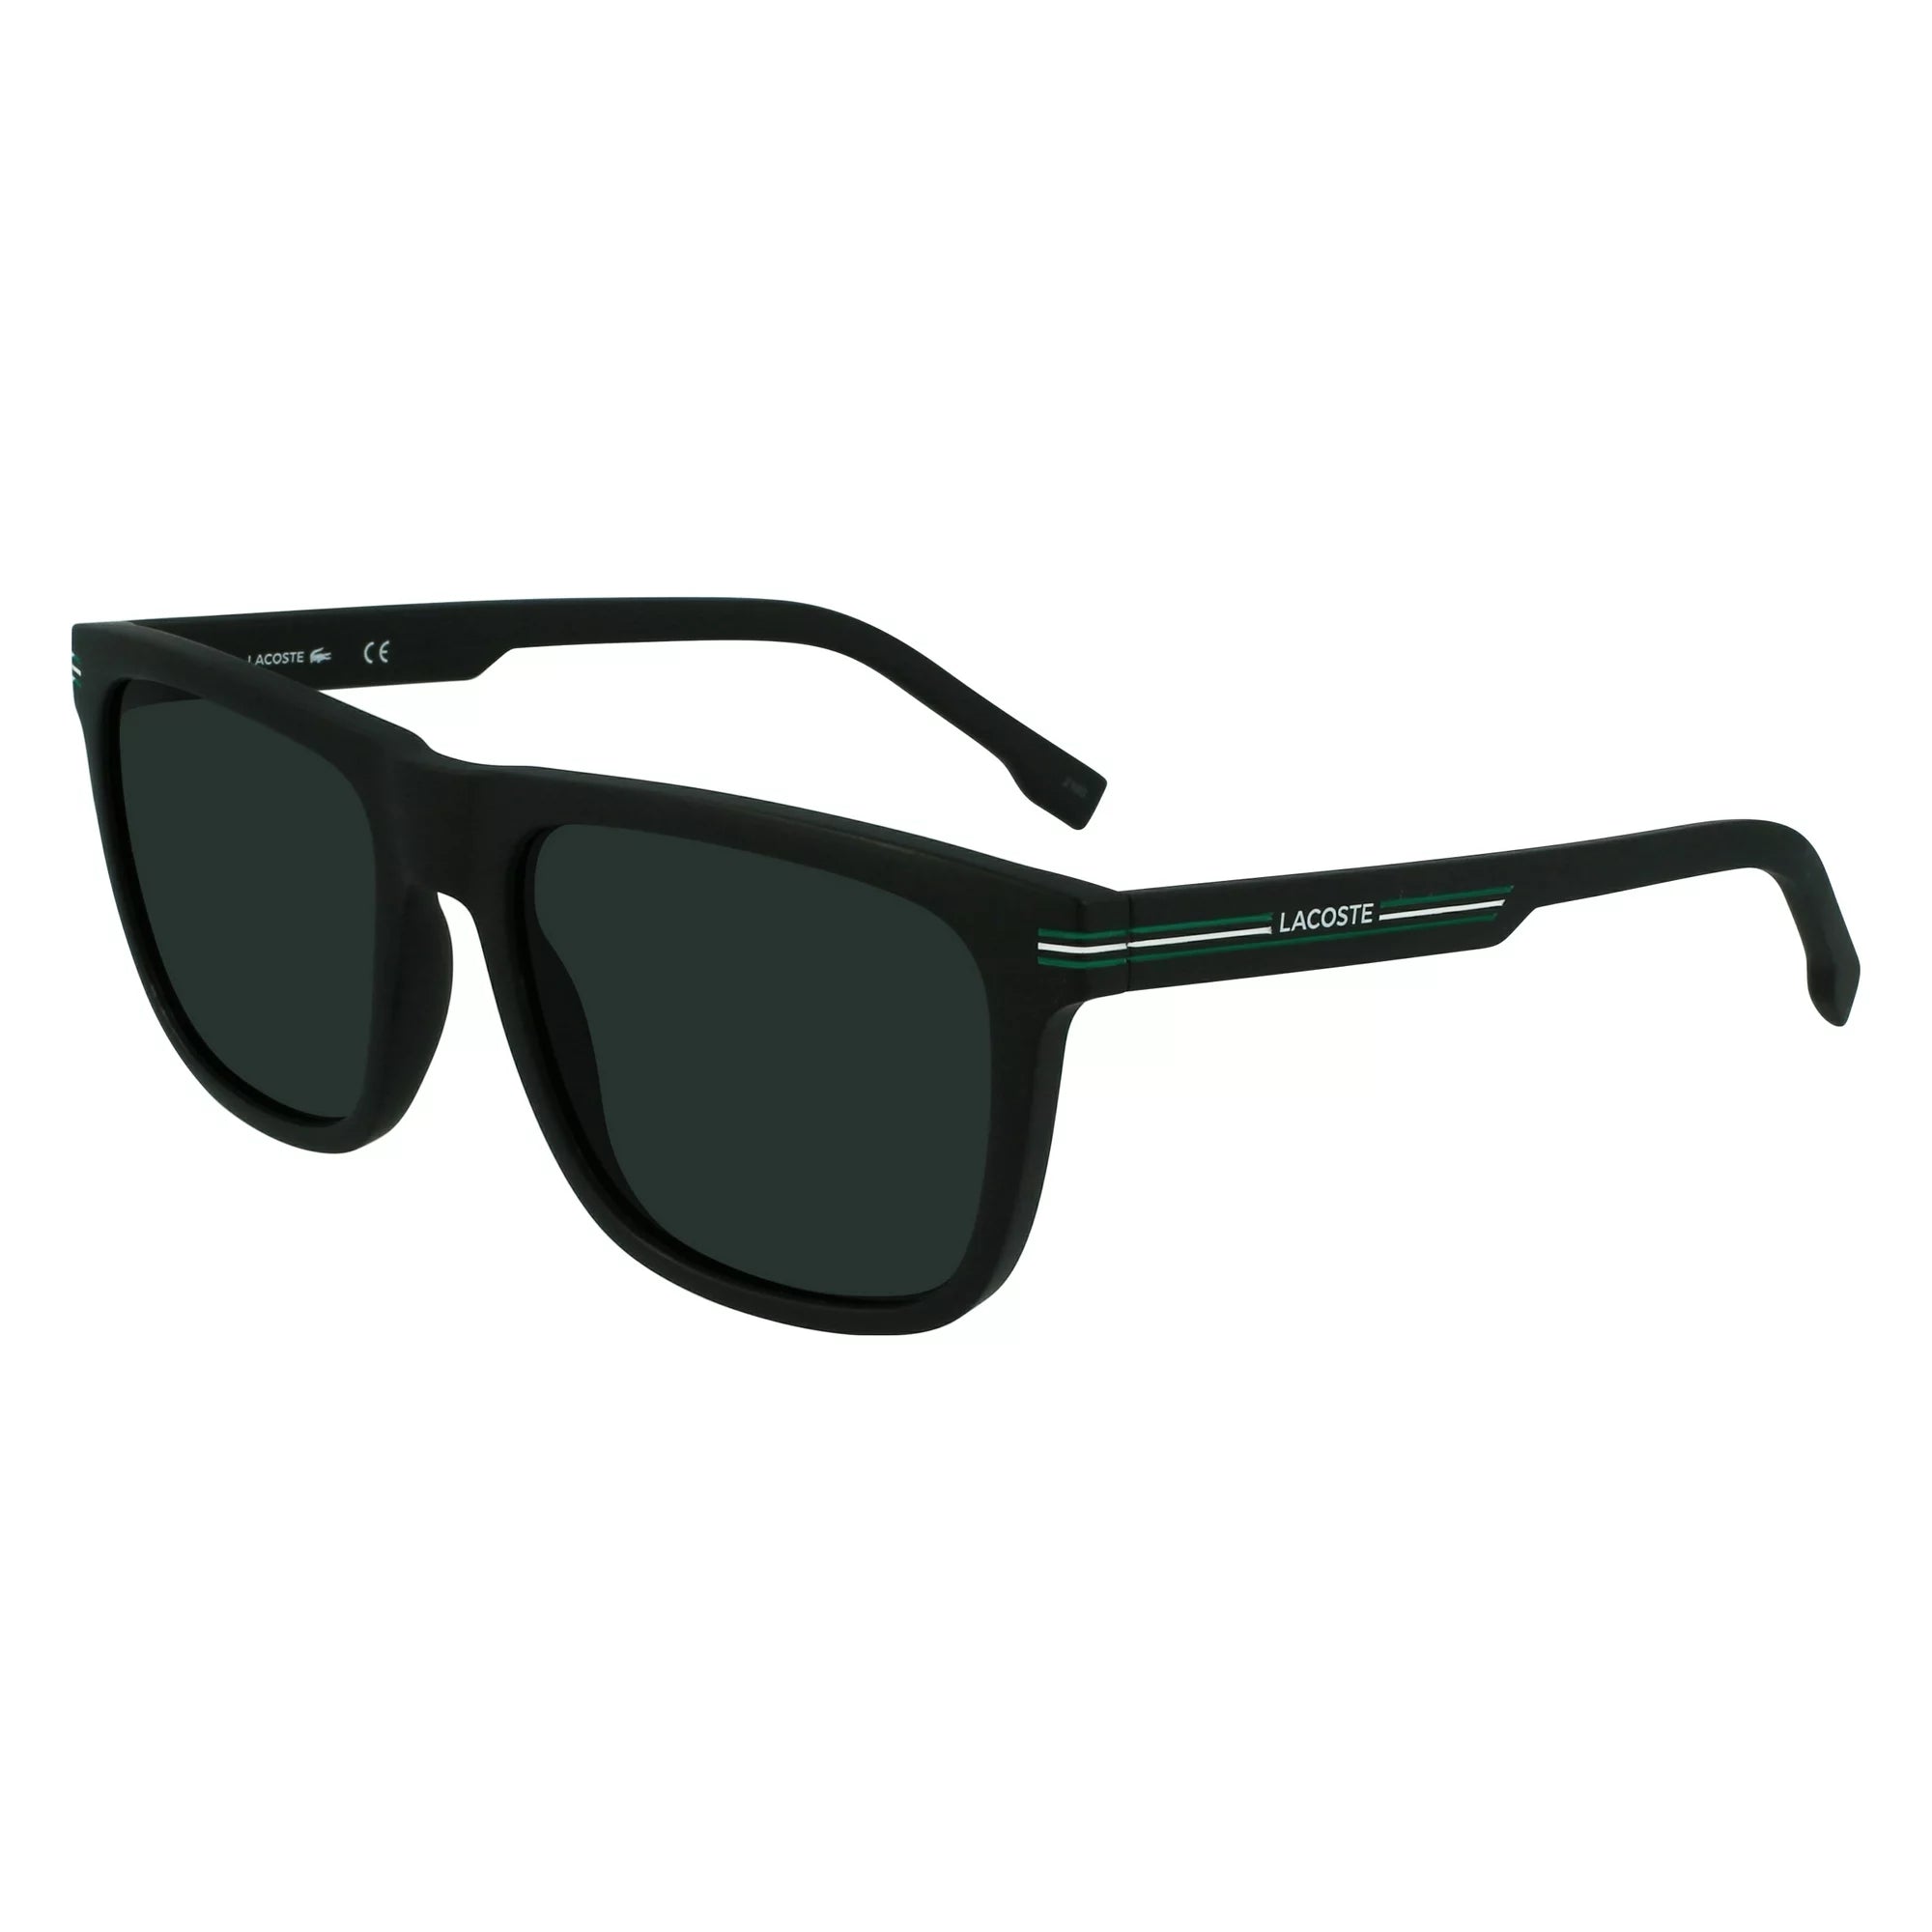 LACOSTE Sunglasses L 959 S 002 Matte Black